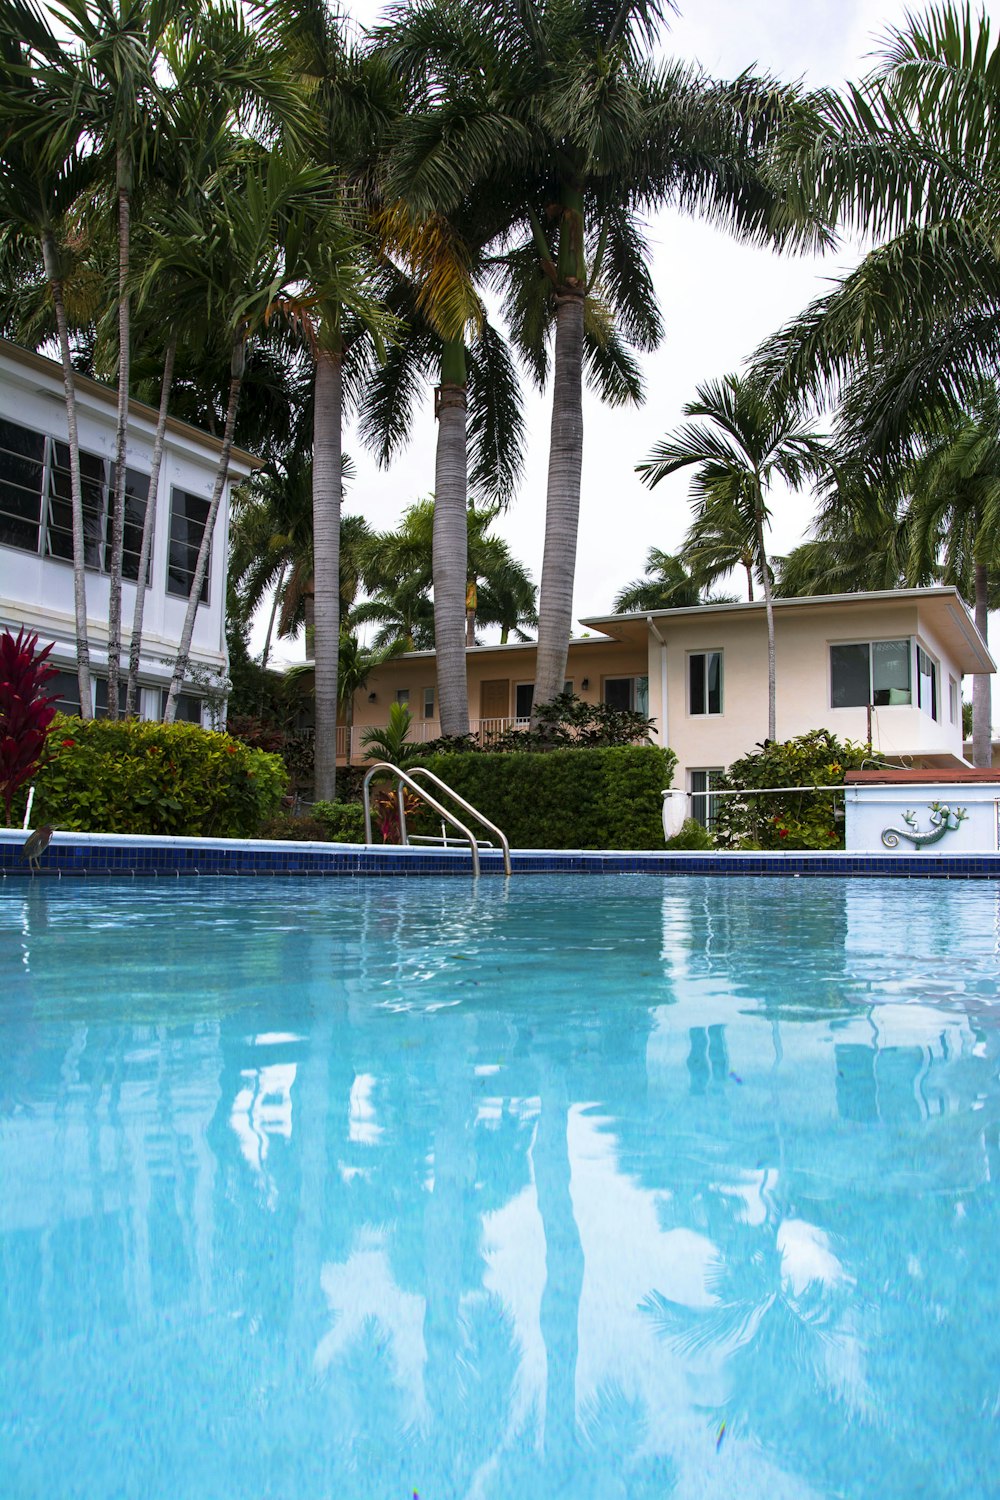 swimming pool near palm trees